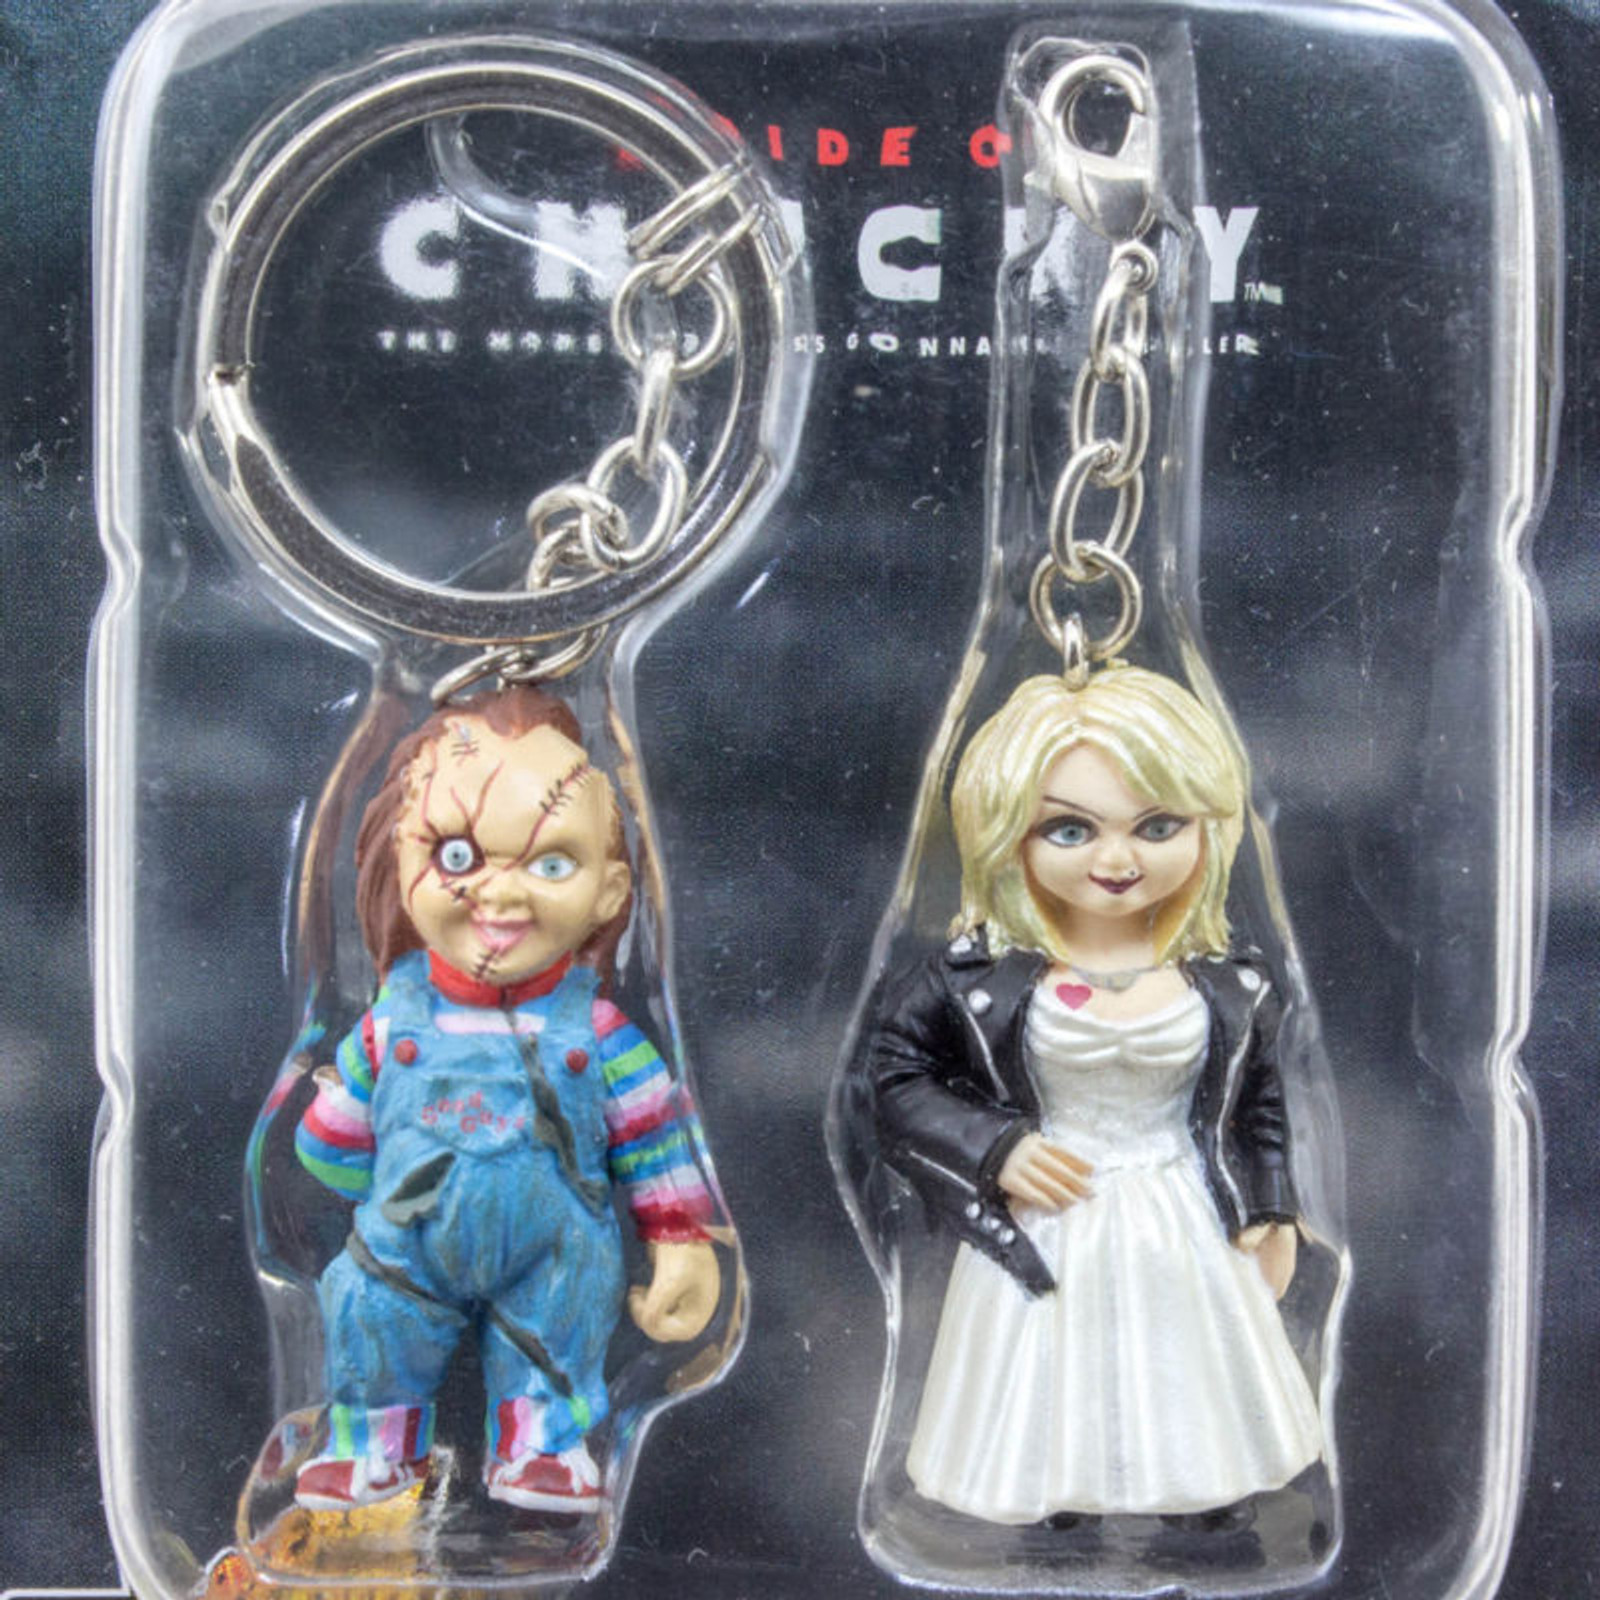 Bride of Chucky Tiffany Strap Universal Studios Japan Dream Rush / Child's Play